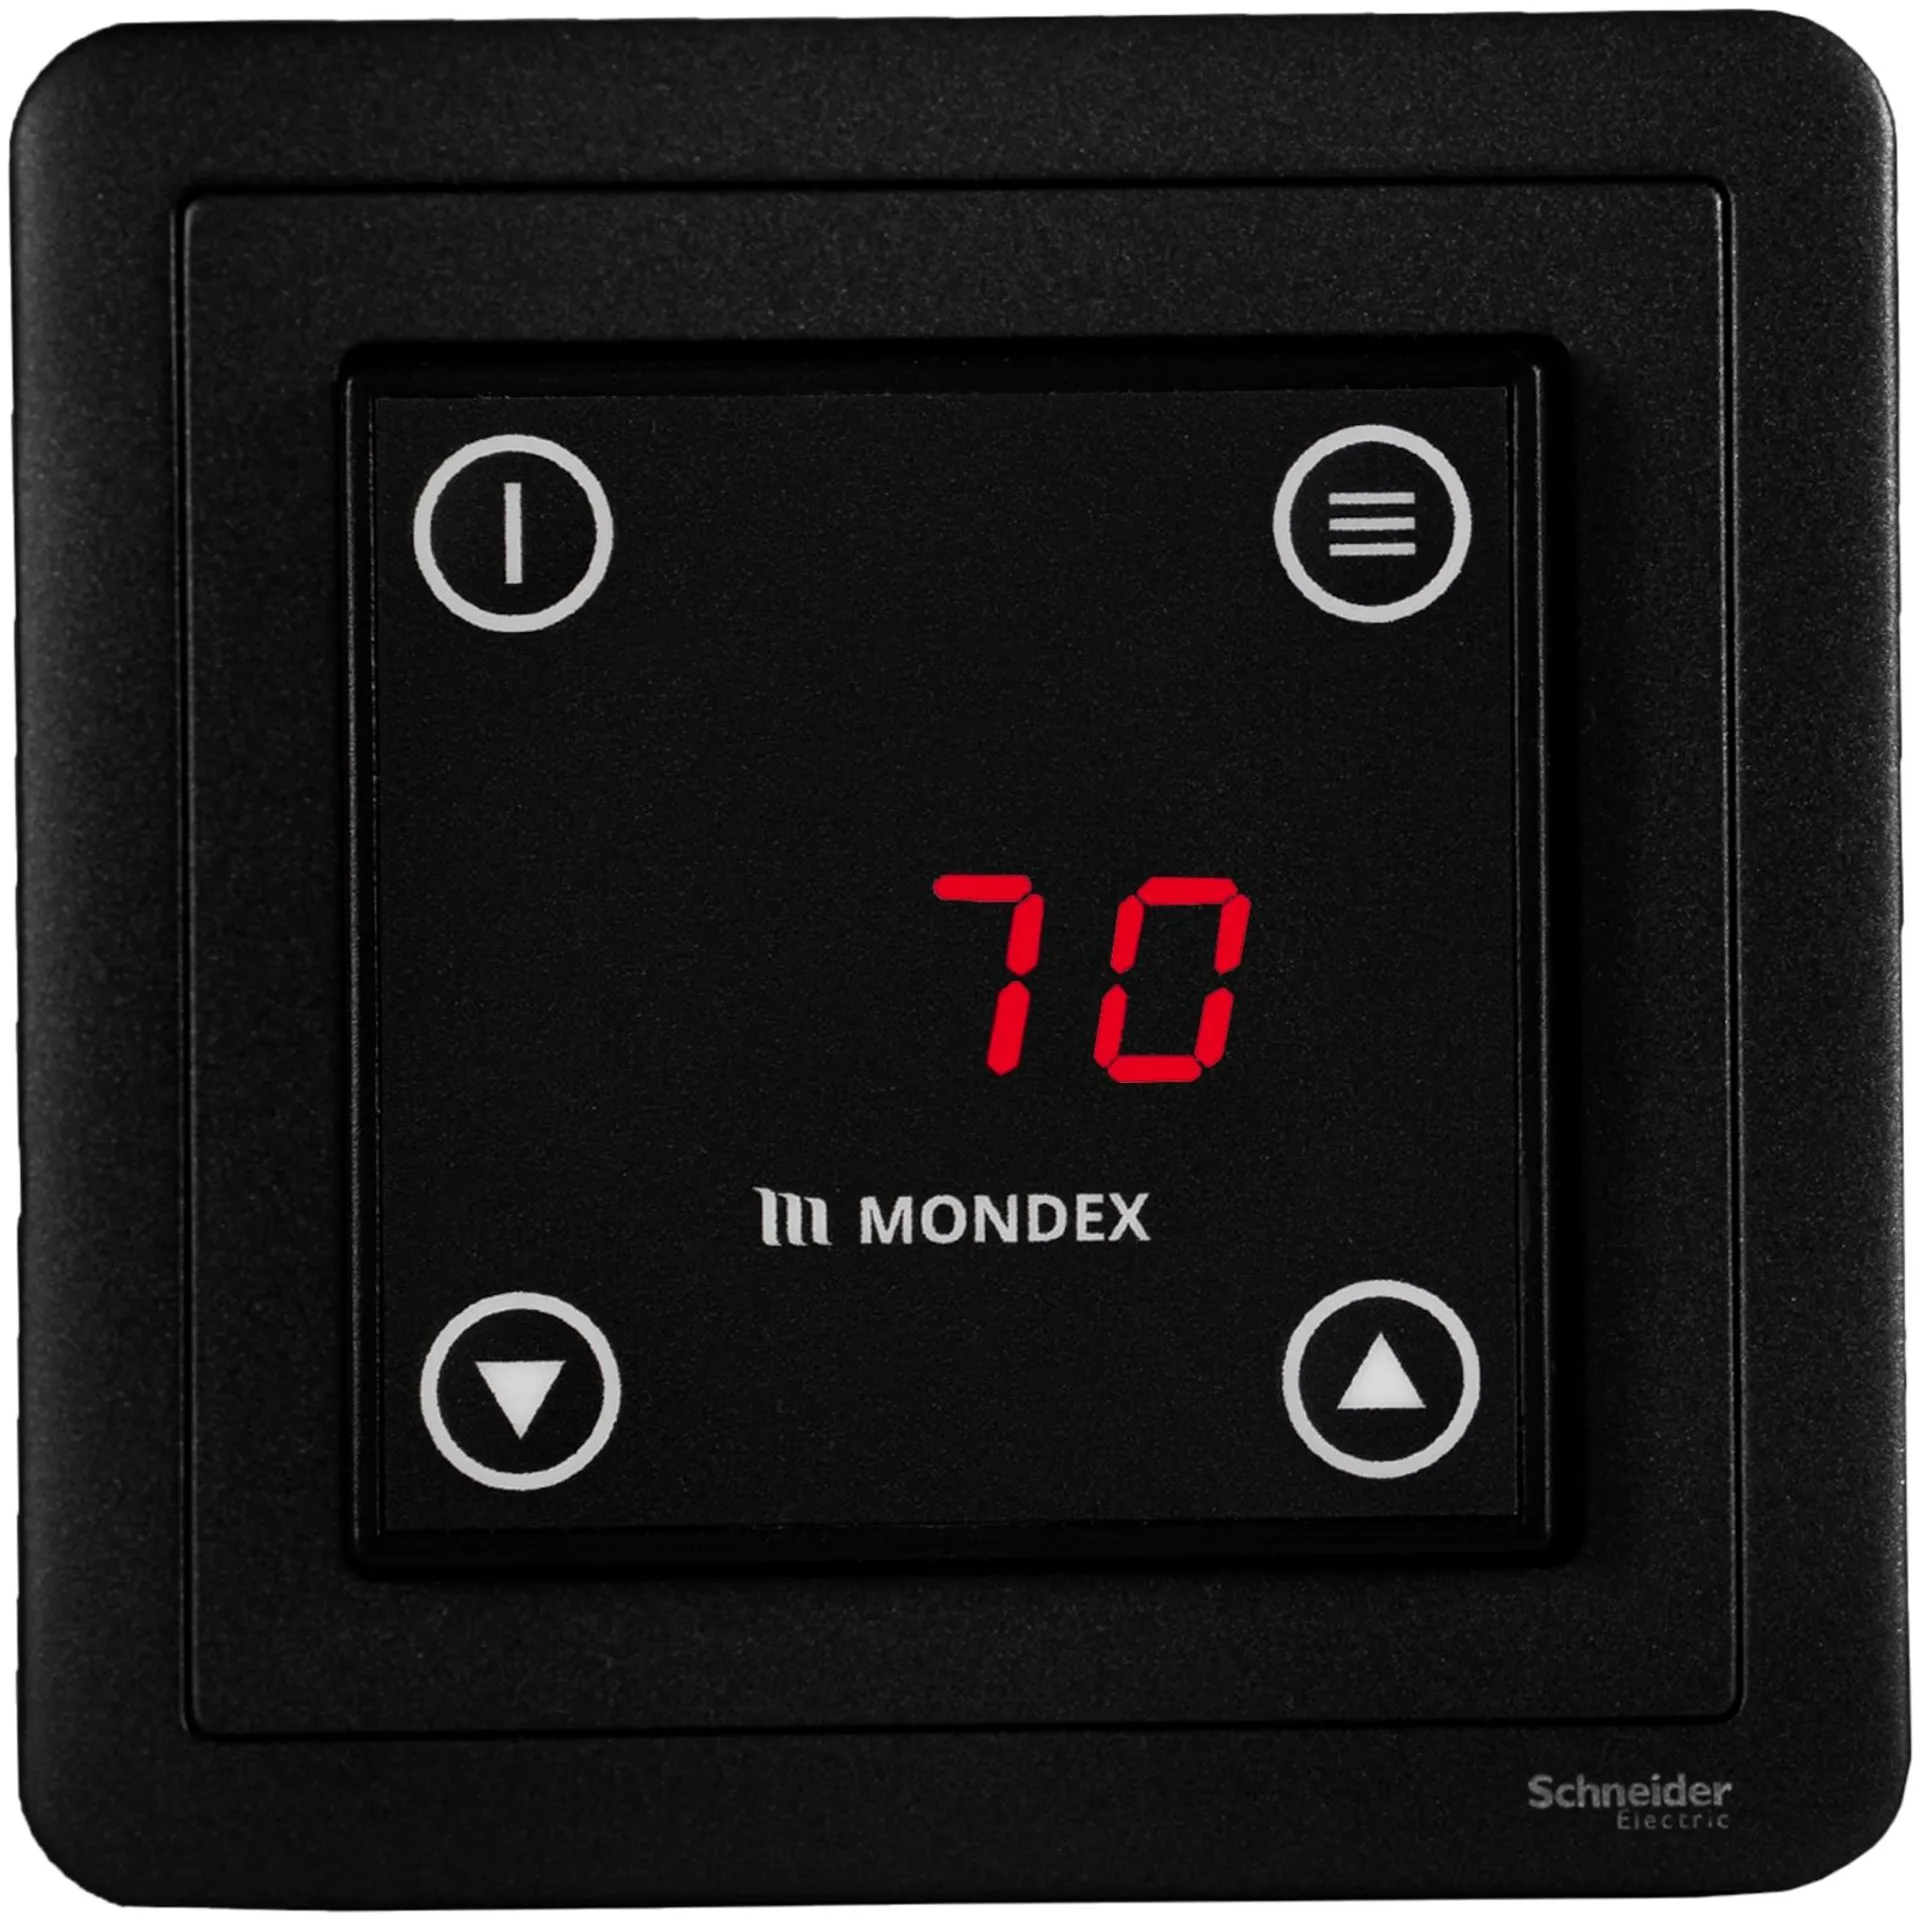 Sähkökiuas Mondex Teno E2 9.0 KW rst - 2